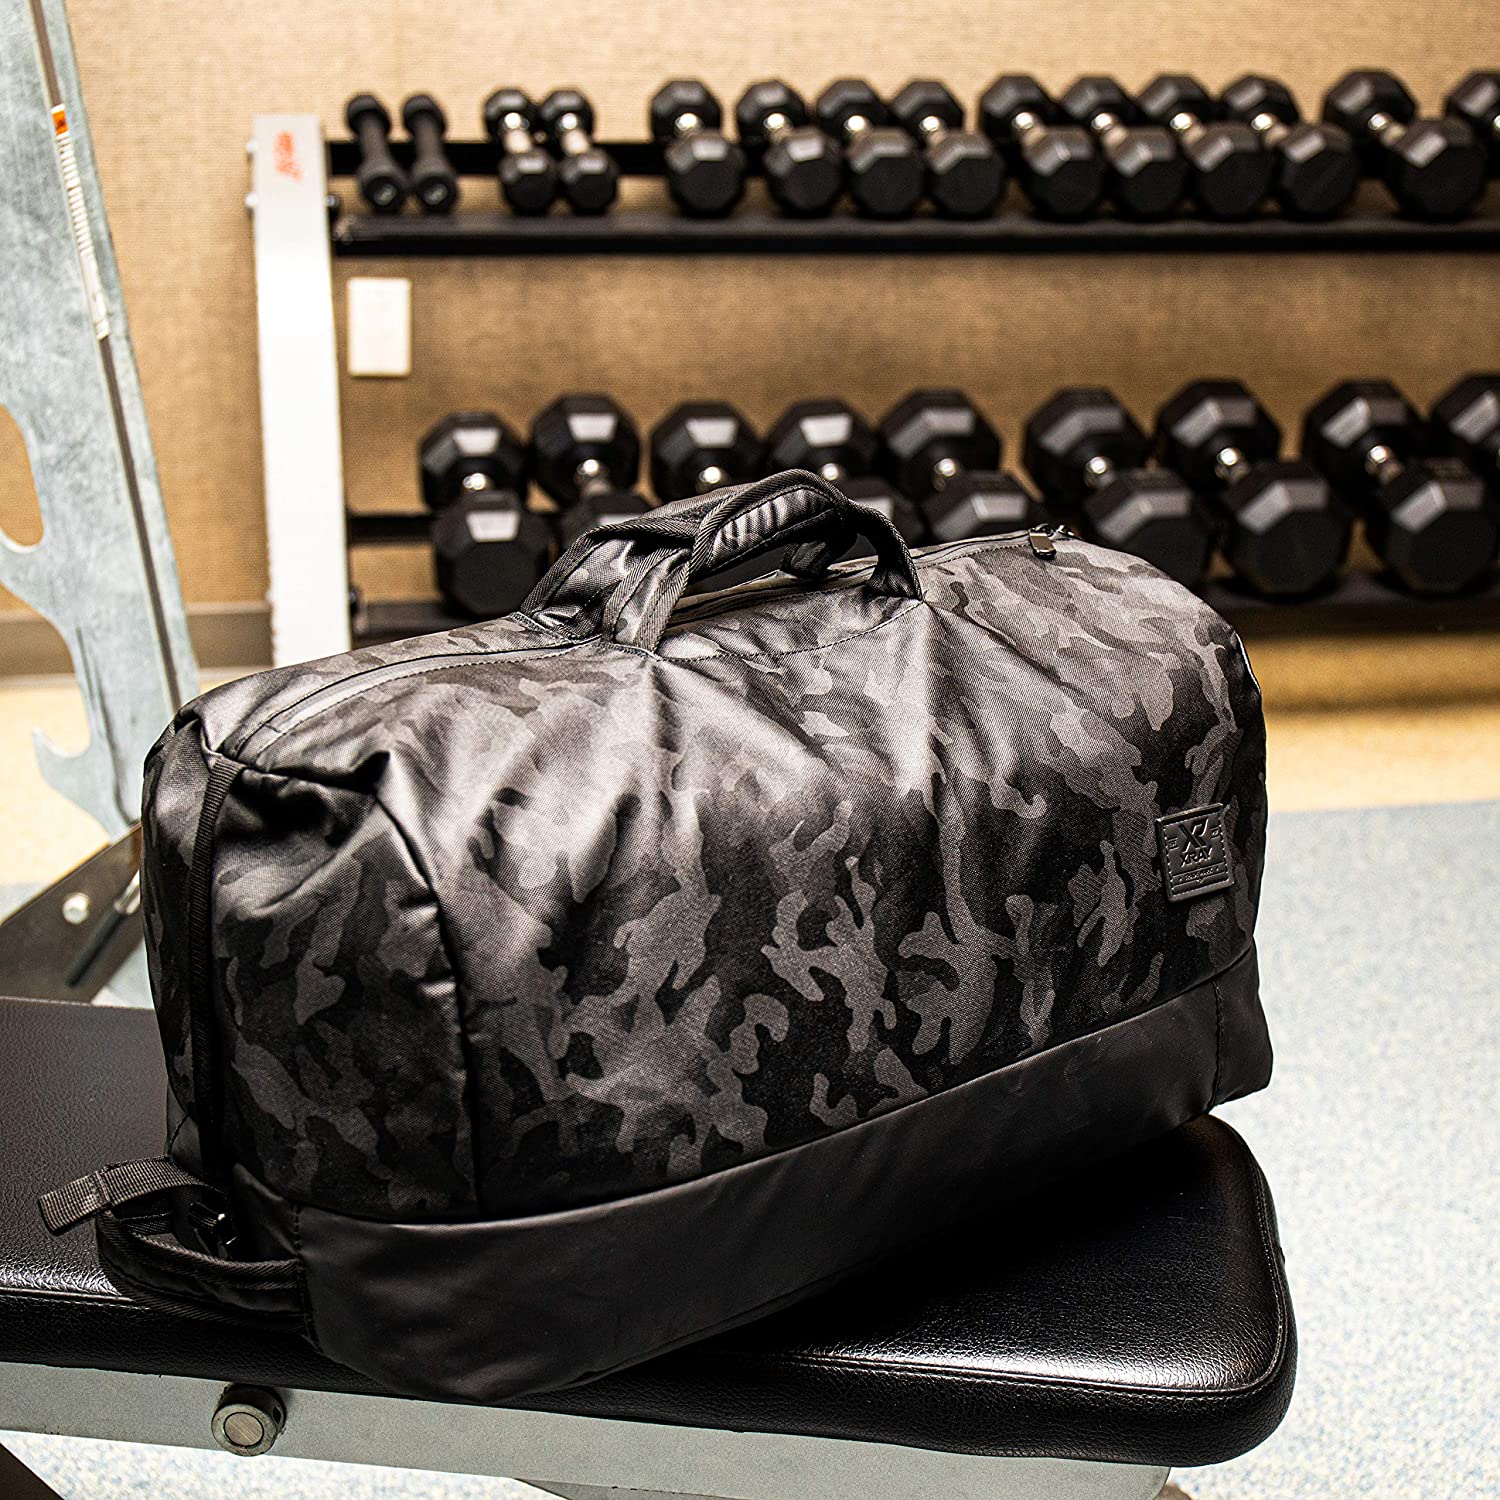 Gym Bag Backpack, Waterproof Camo Duffel Bag For Men and Women, Outdoor Travel Weekender Overnight Rucksack Duffle - image 2 of 2